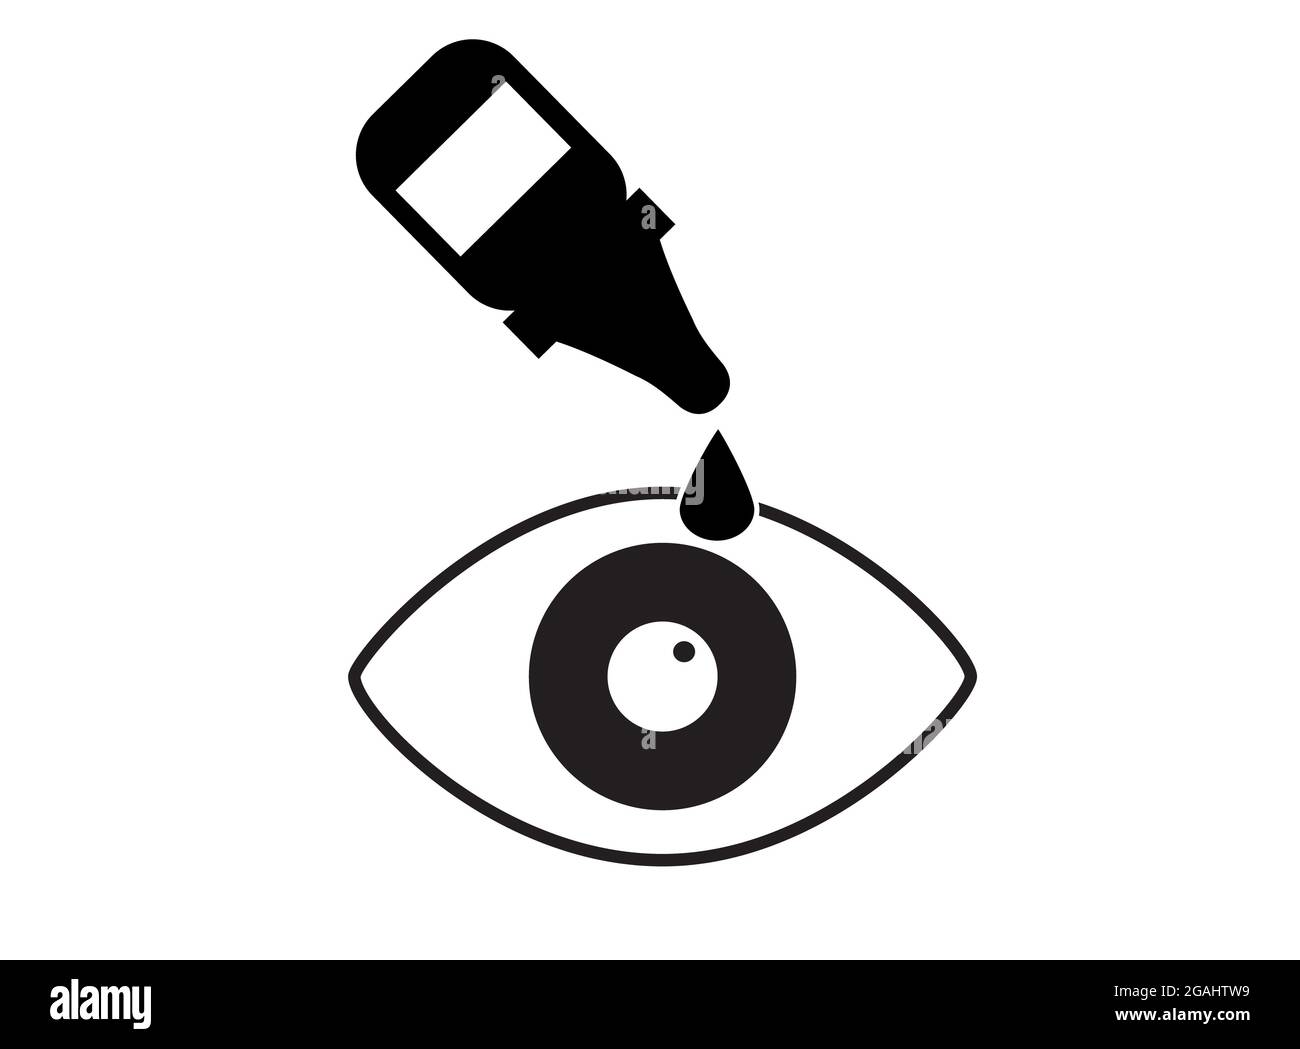 Eye drop icon on white background. Eye health sign. Dropper bottle symbol. flat style. Stock Photo